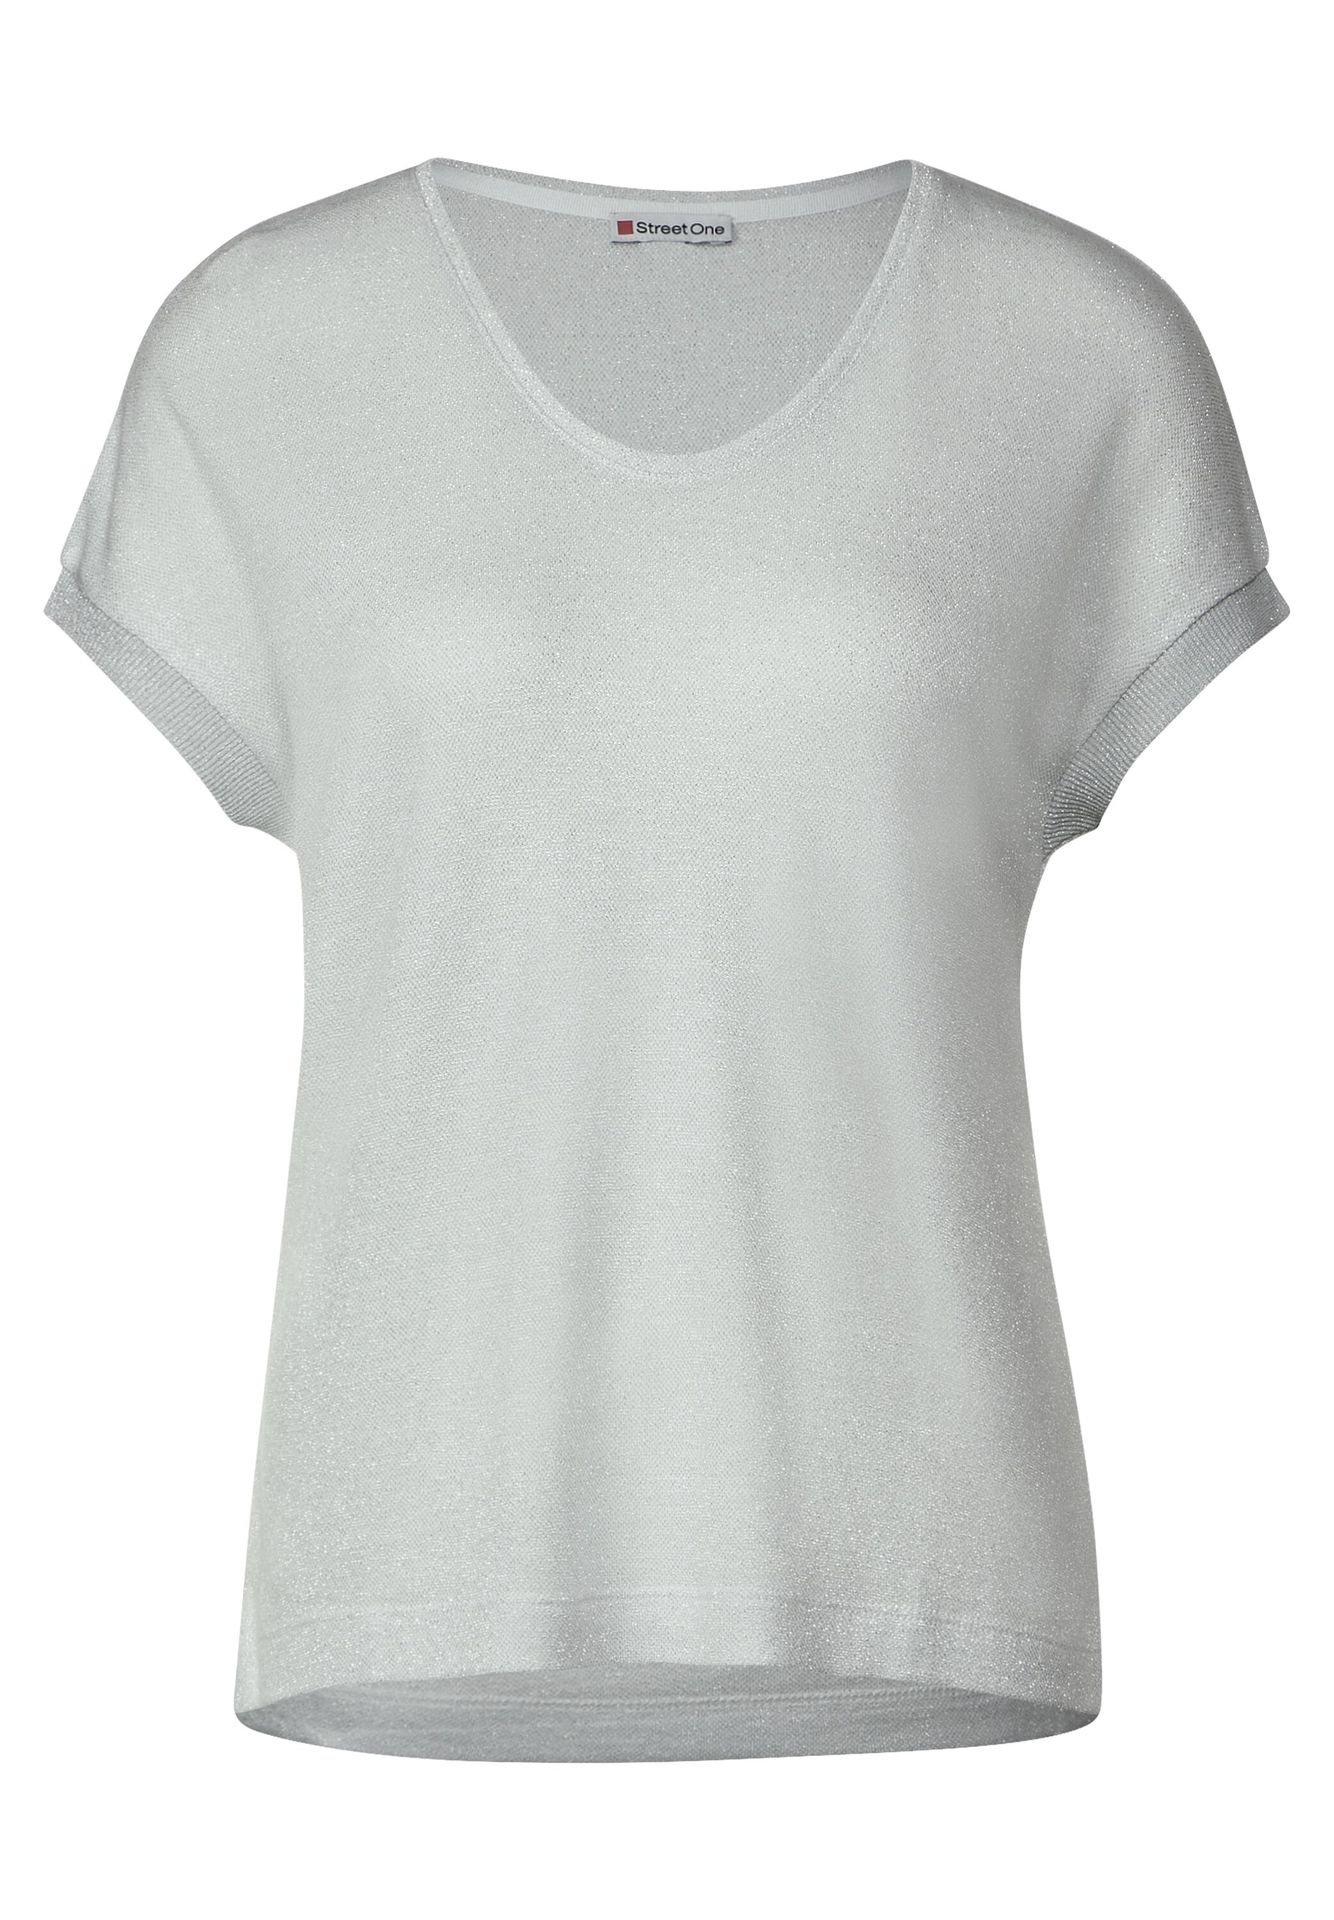 Street-One LTD QR v-neck shiny shirt off white 2900145730030